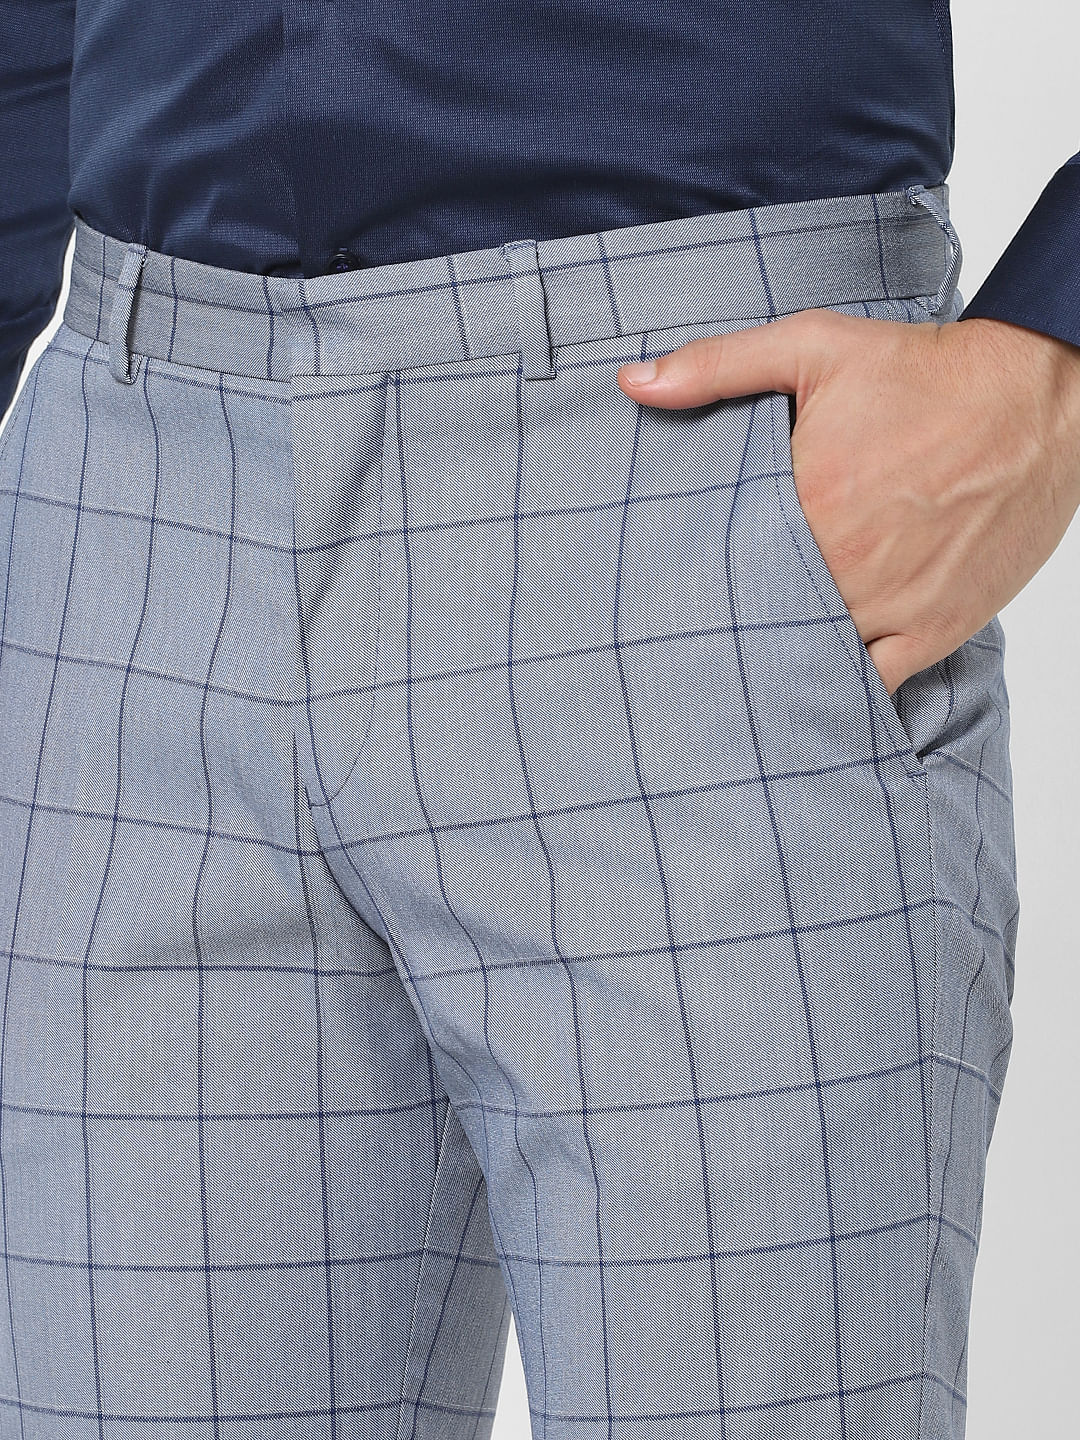 Buy Slim Fit Trousers Online in India